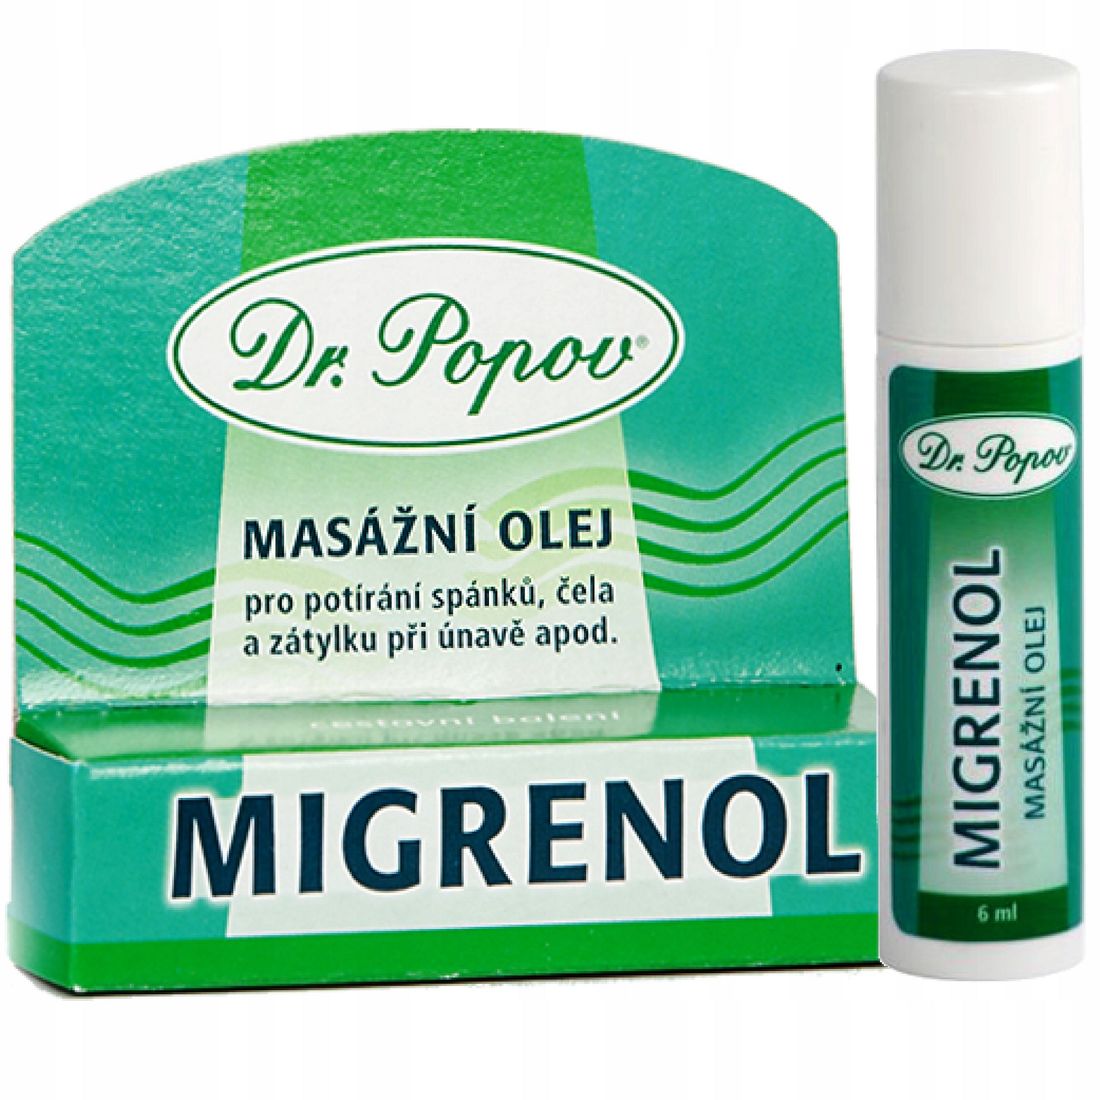 Dr Popov Migrenol roll-on na migrenę 6 ml - ERLI.pl